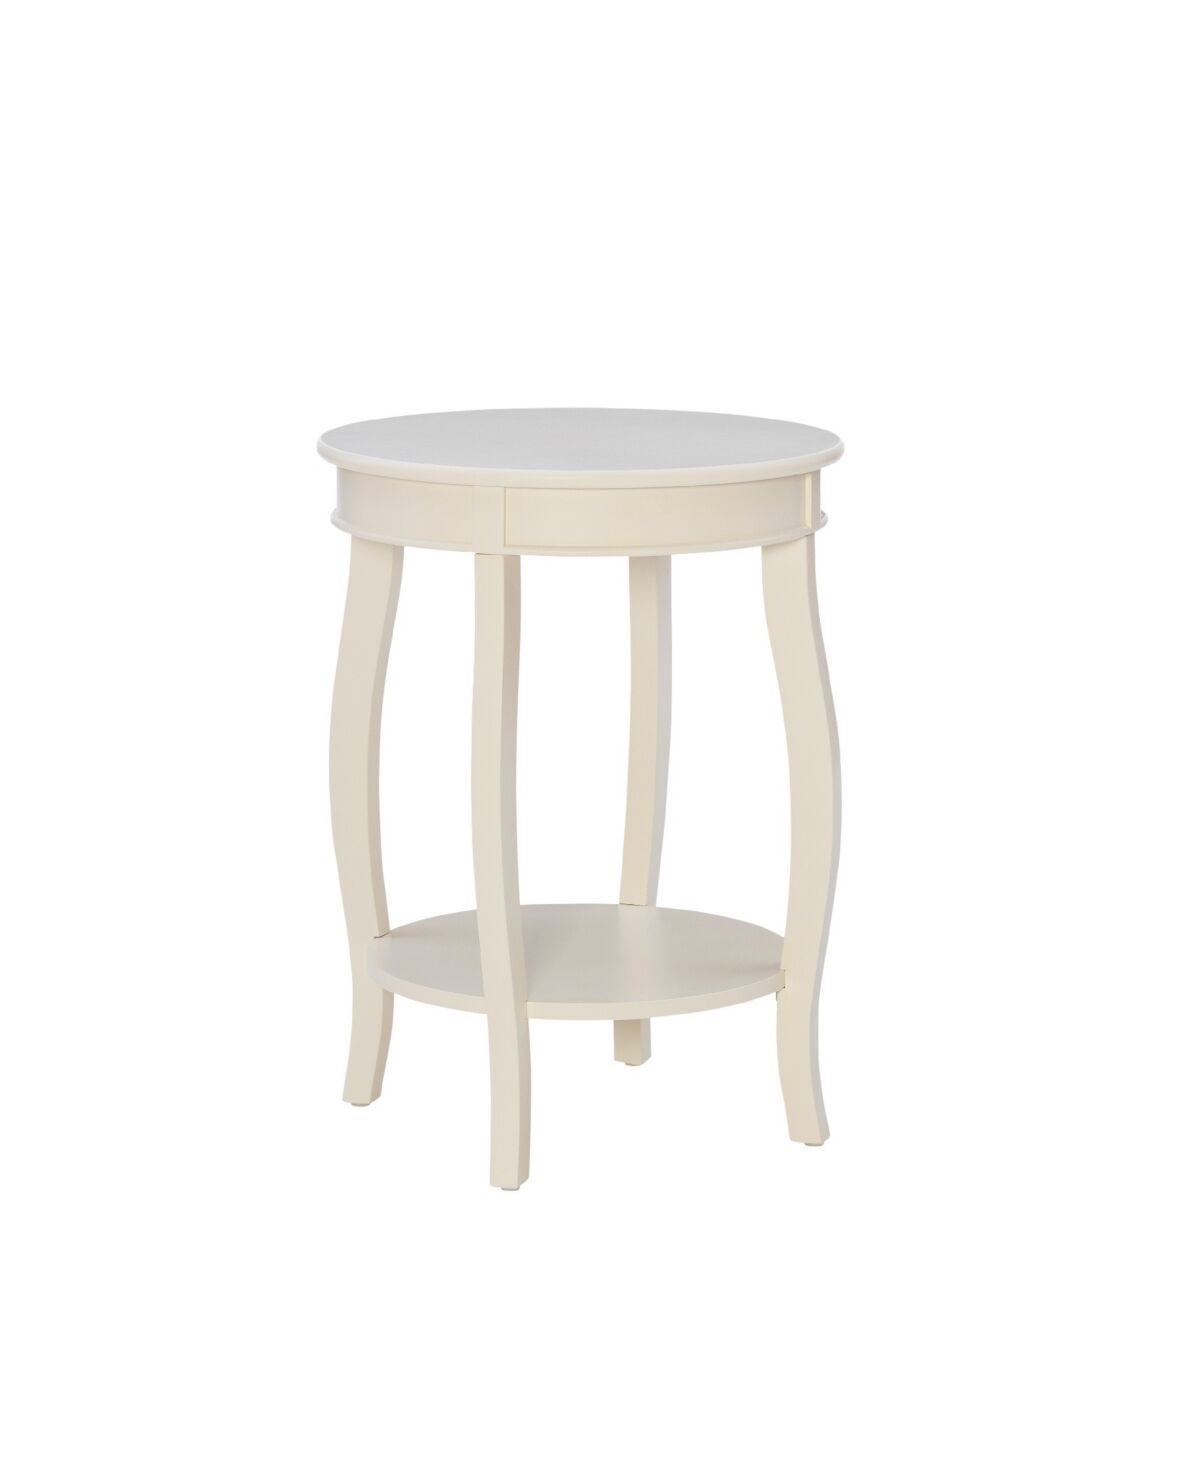 Linon Home Decor Powell Furniture Andover Round Side Table - White